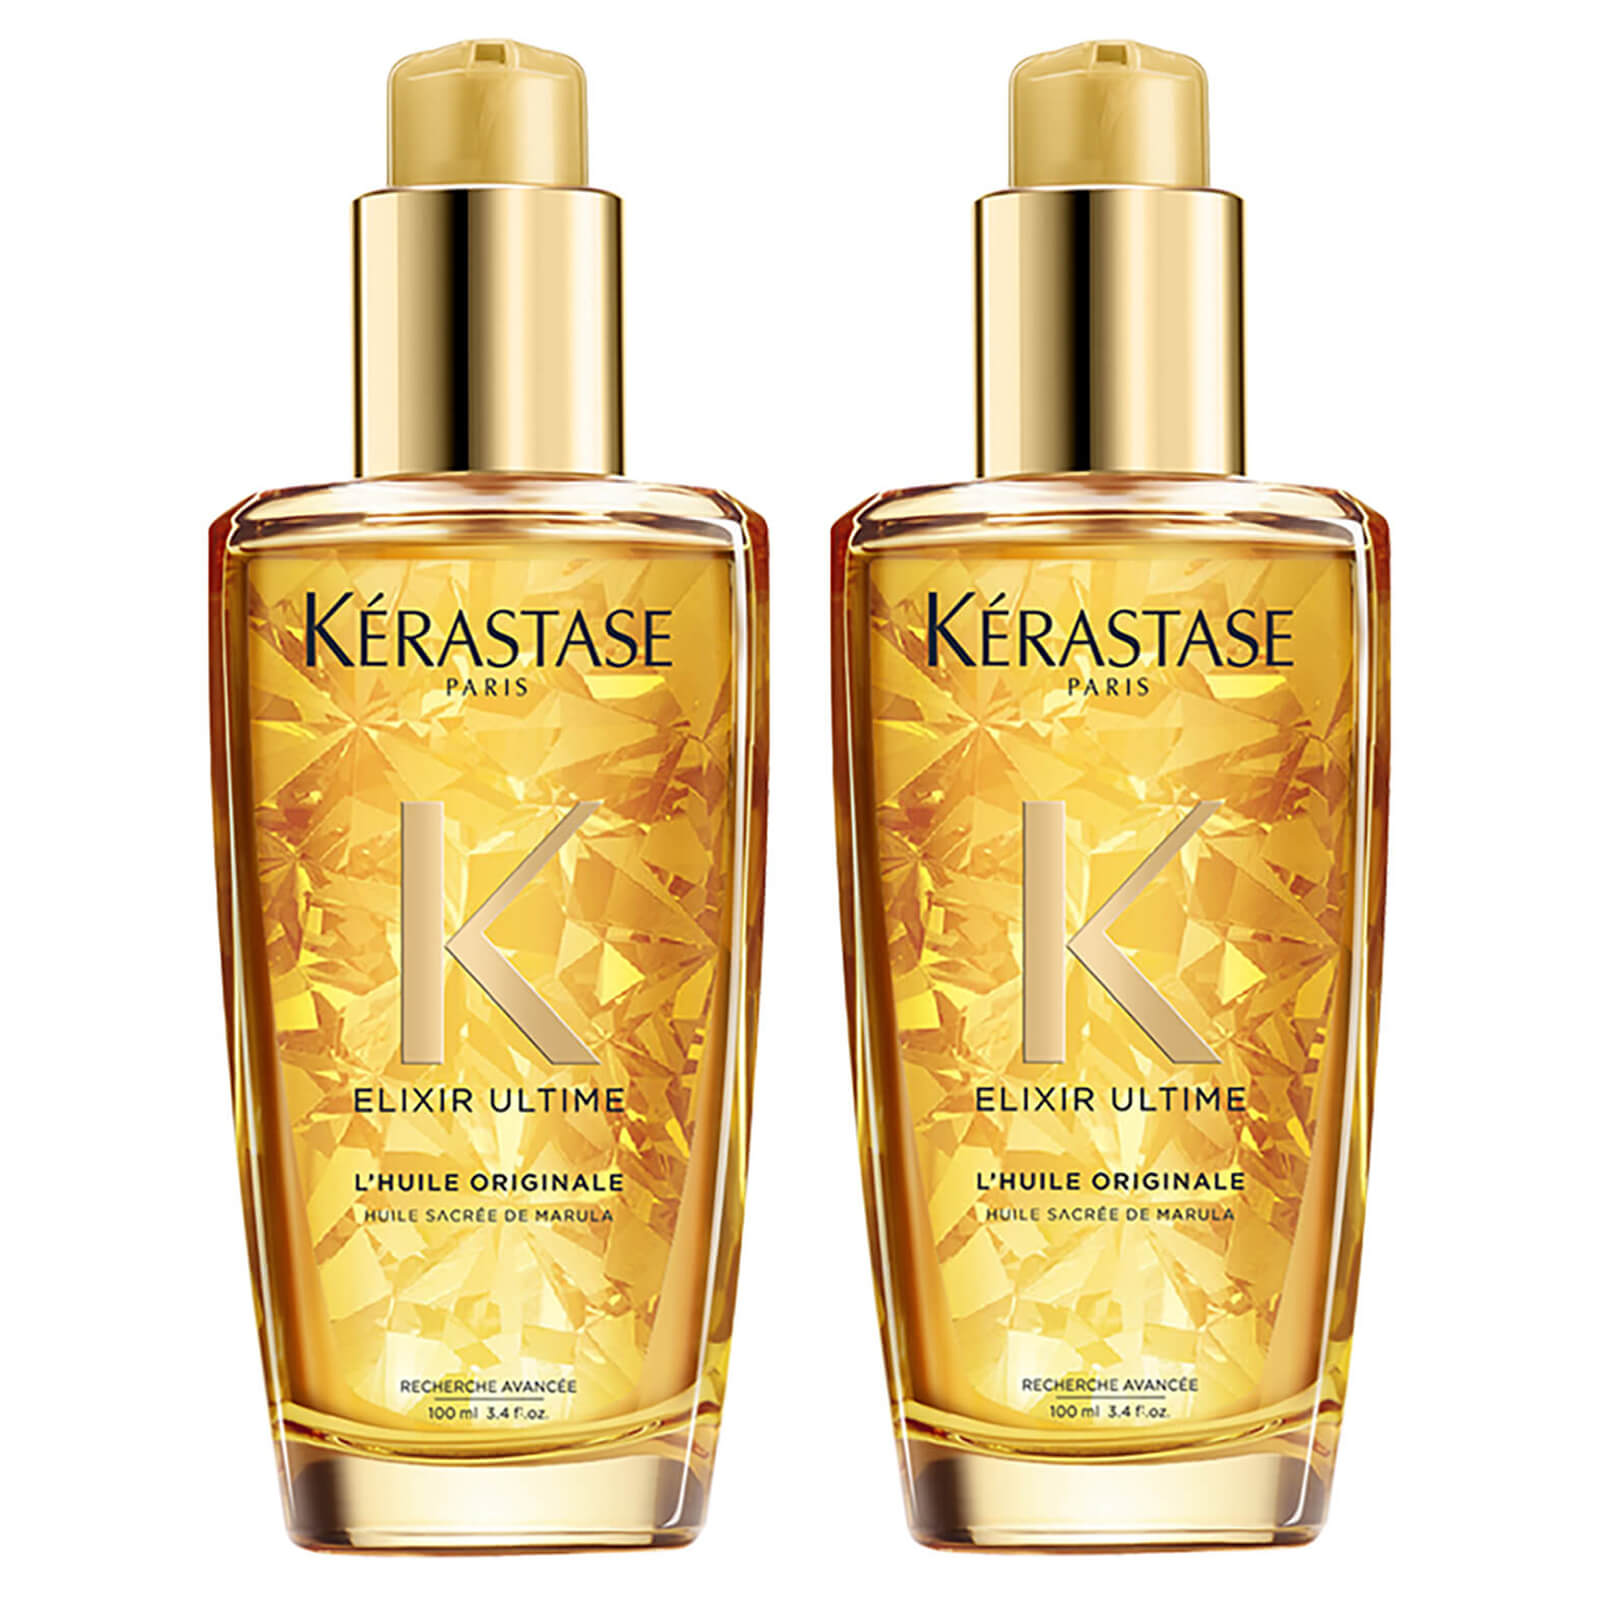 Image of Kérastase Elixir Ultime L'Original Hair Oil Duo 100ml